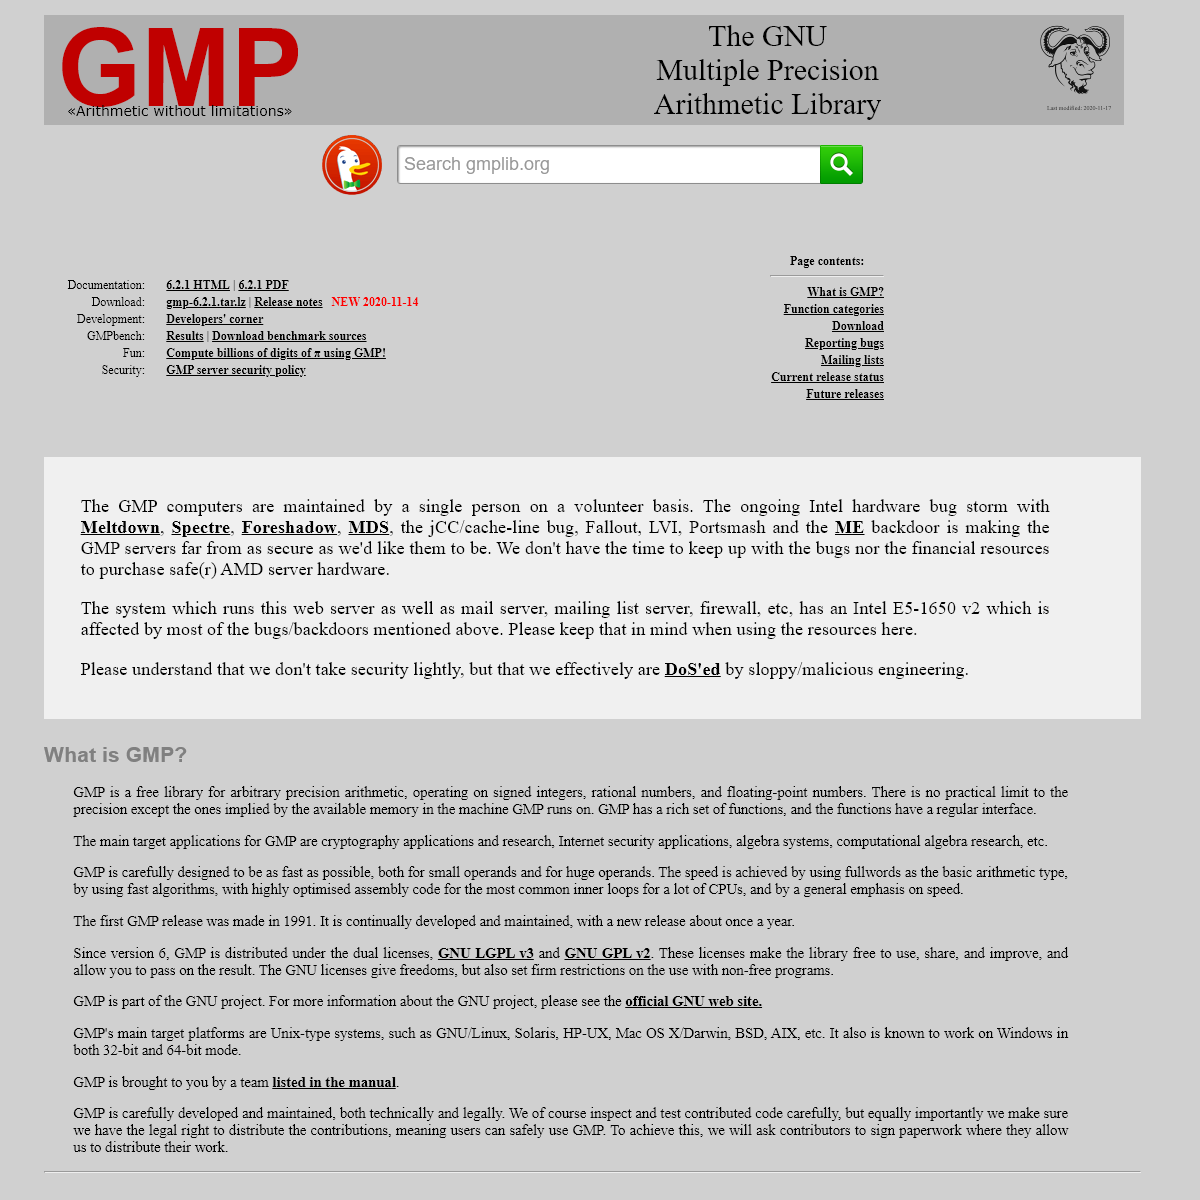 A complete backup of gmplib.org